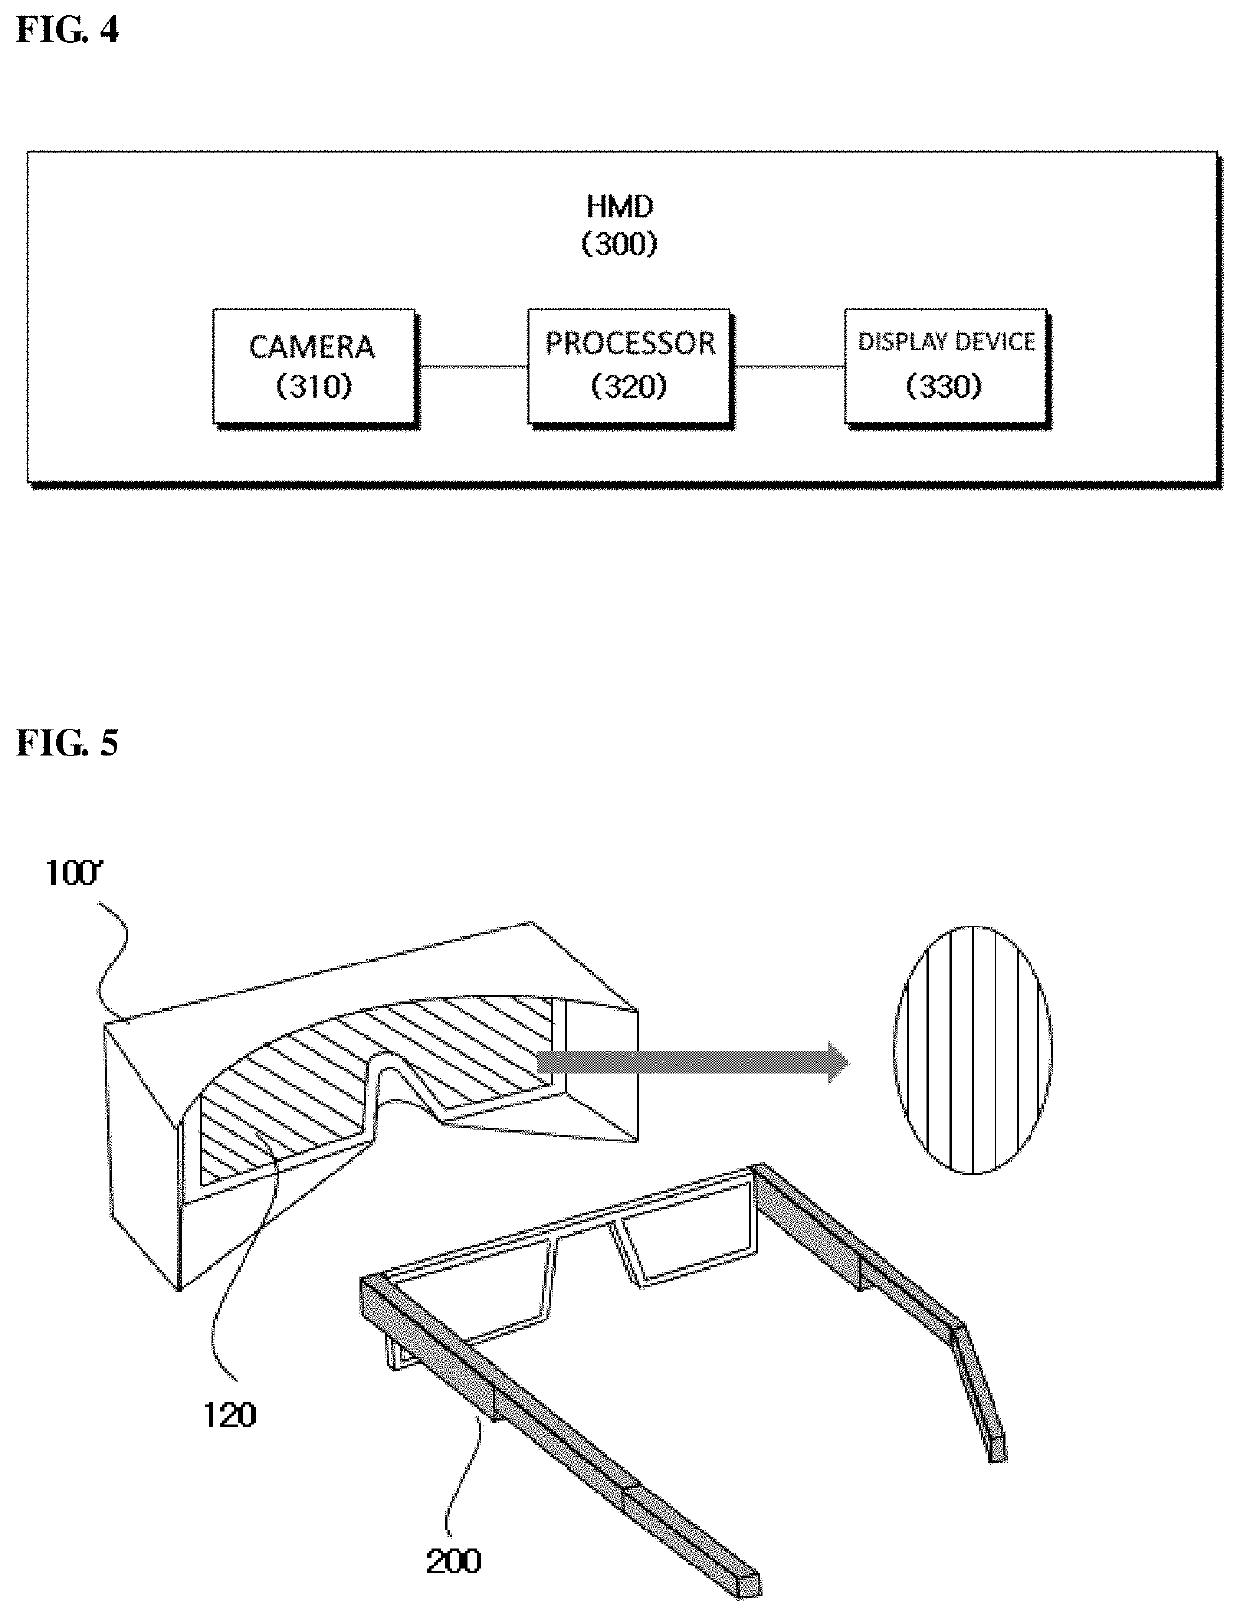 Method and apparatus for displaying virtual reality image